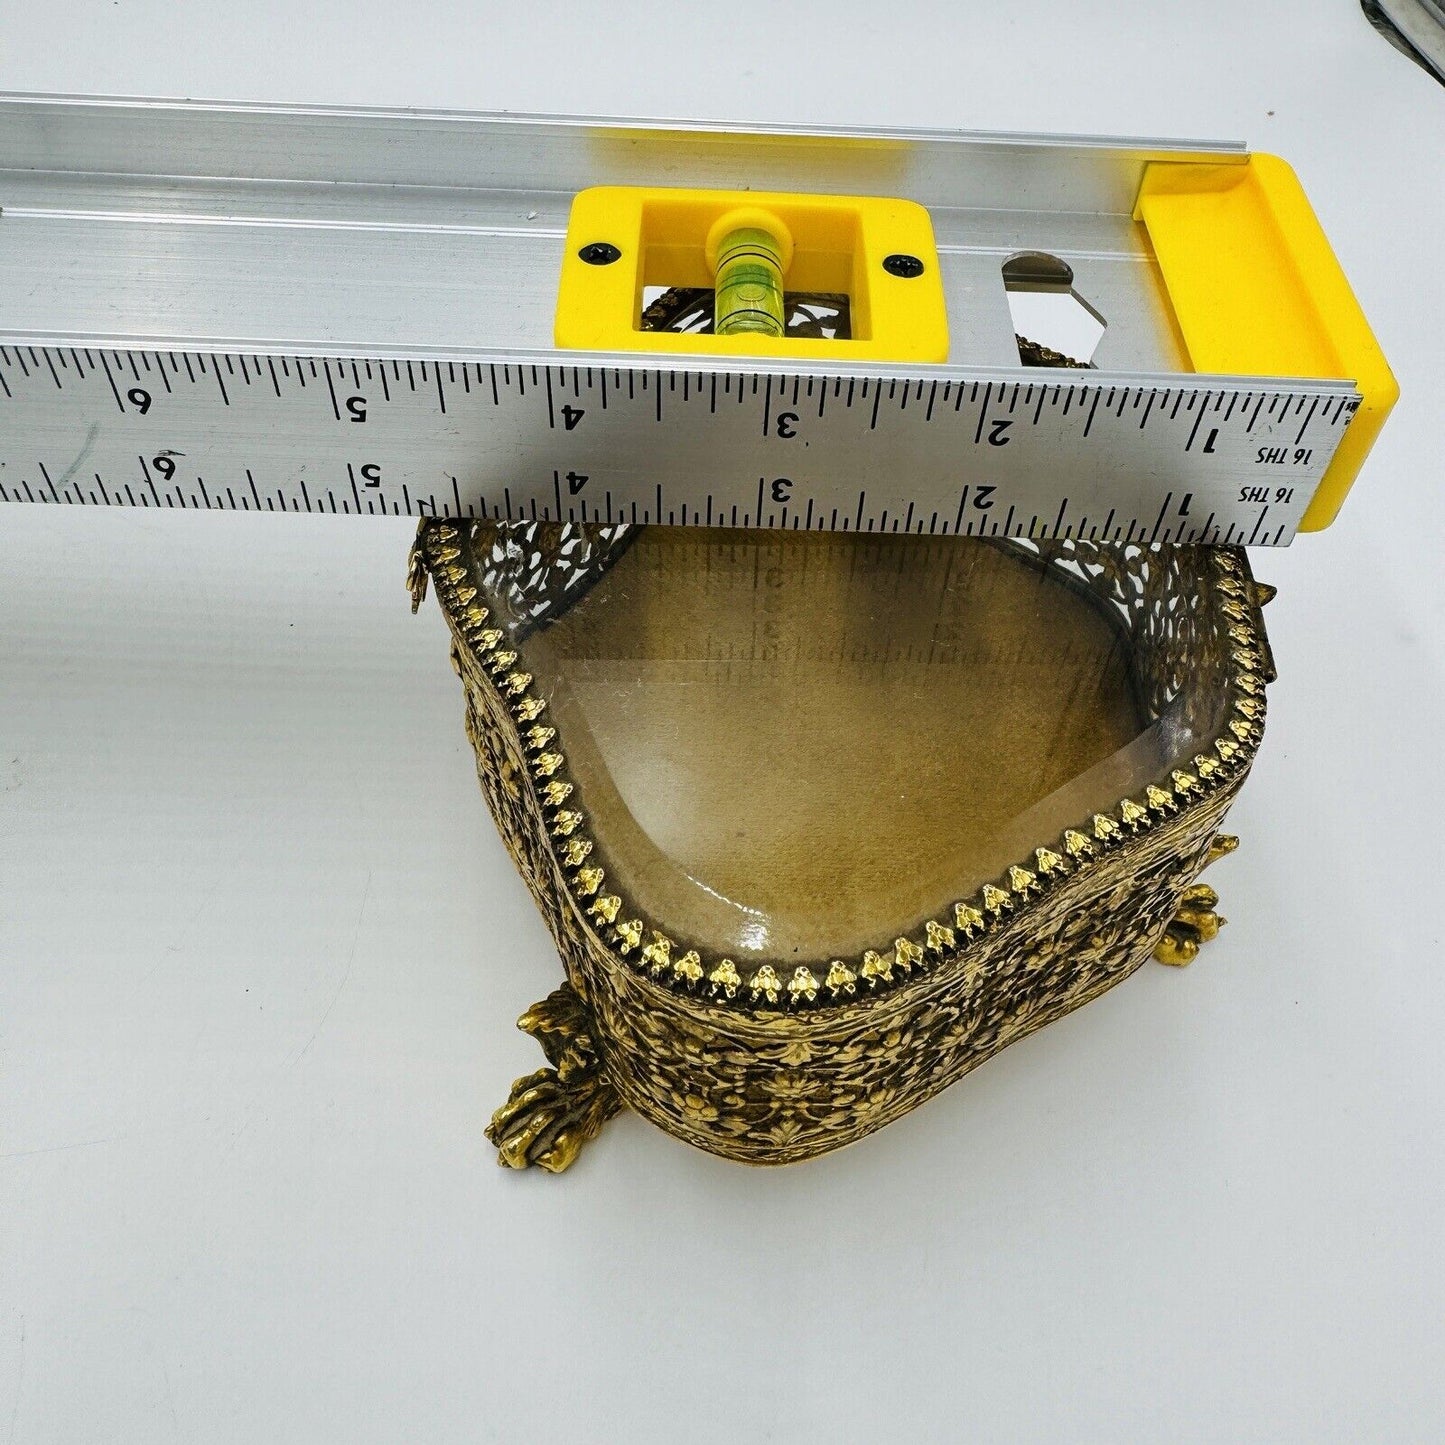 Vintage French Beveled Glass Gold Filigree Ormolu Jewelry Casket Box Claw Foot